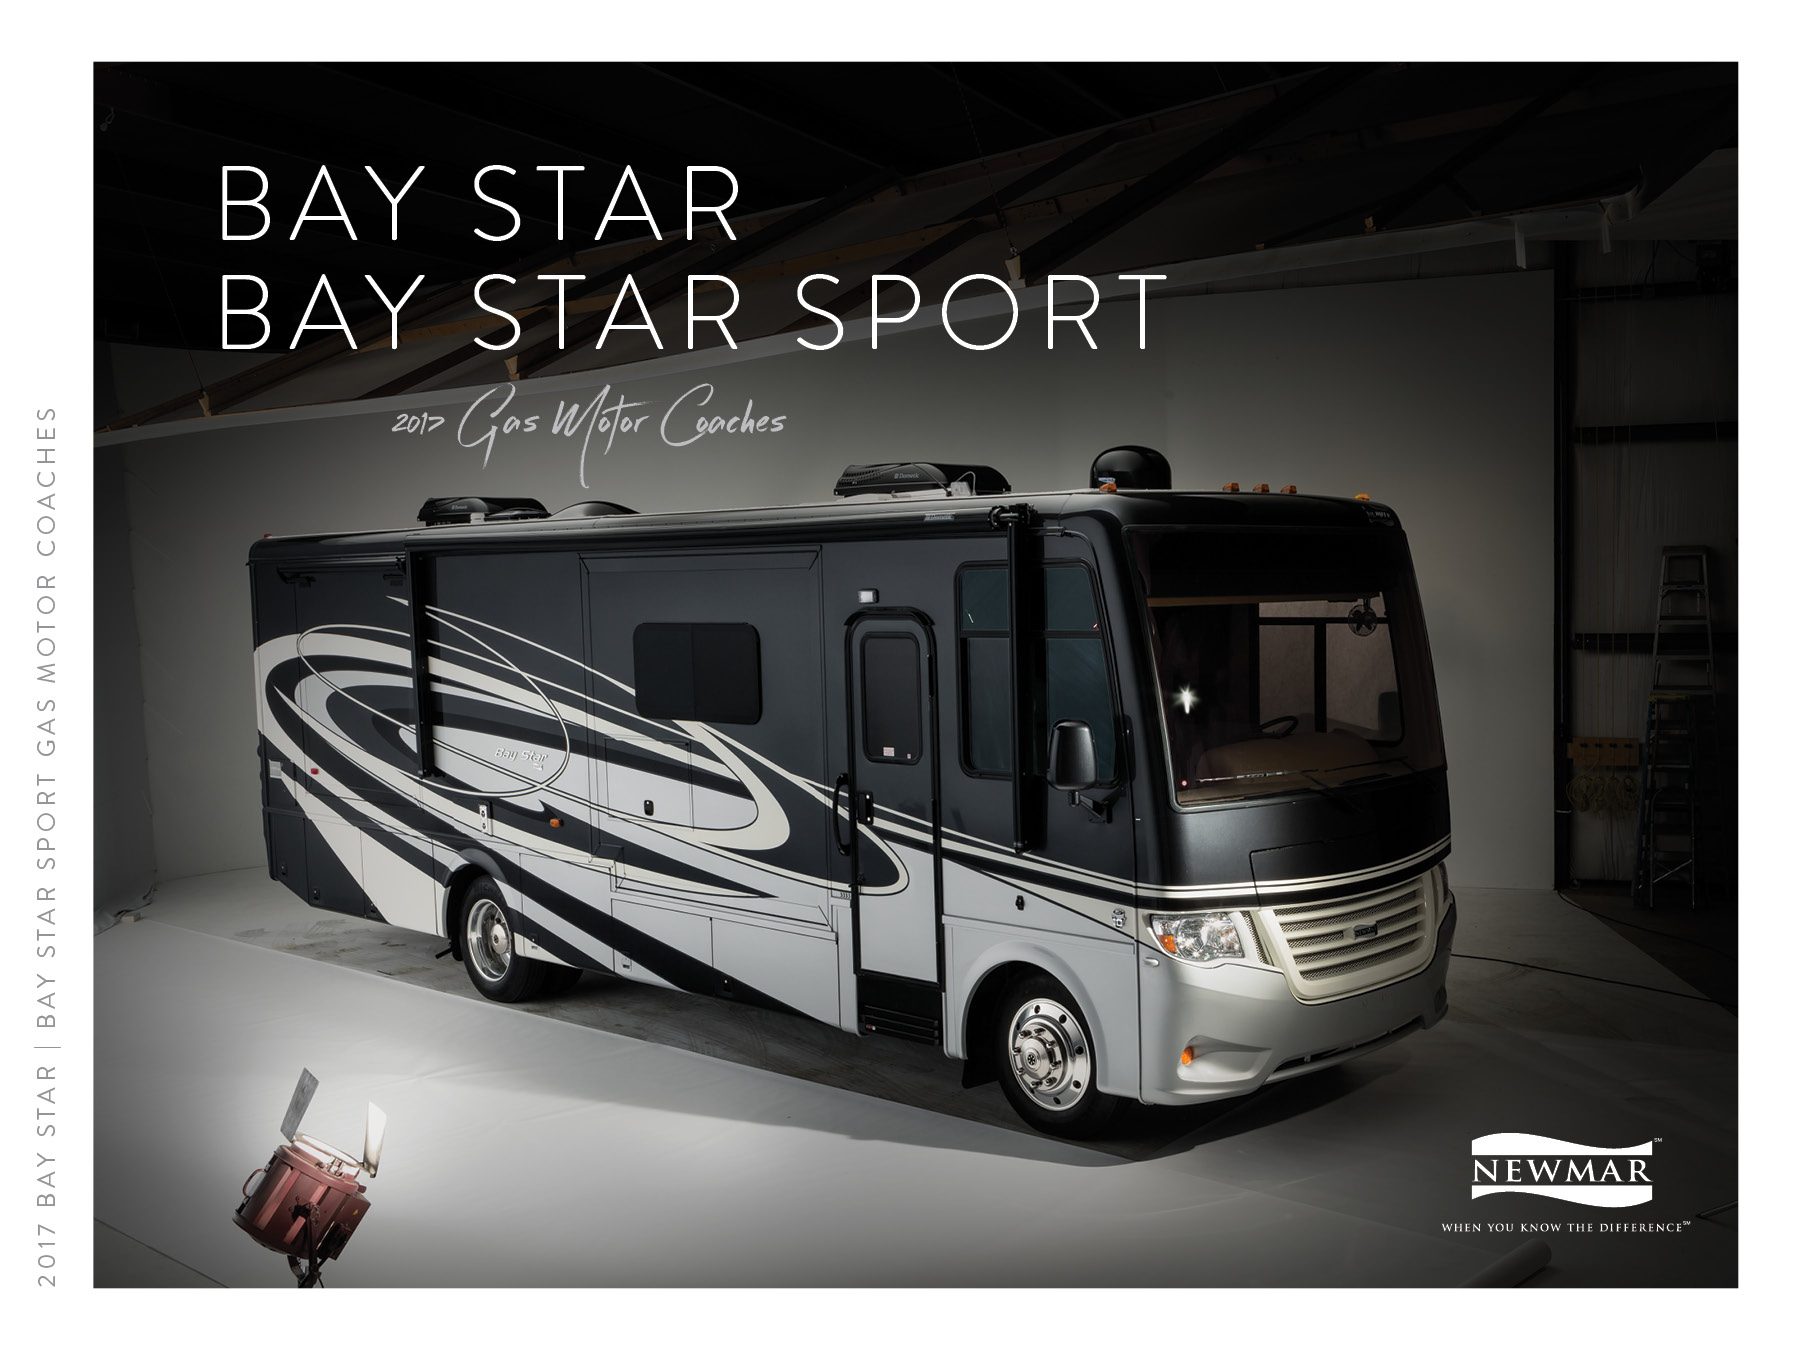 2017 Bay Star, Bay Star Sport